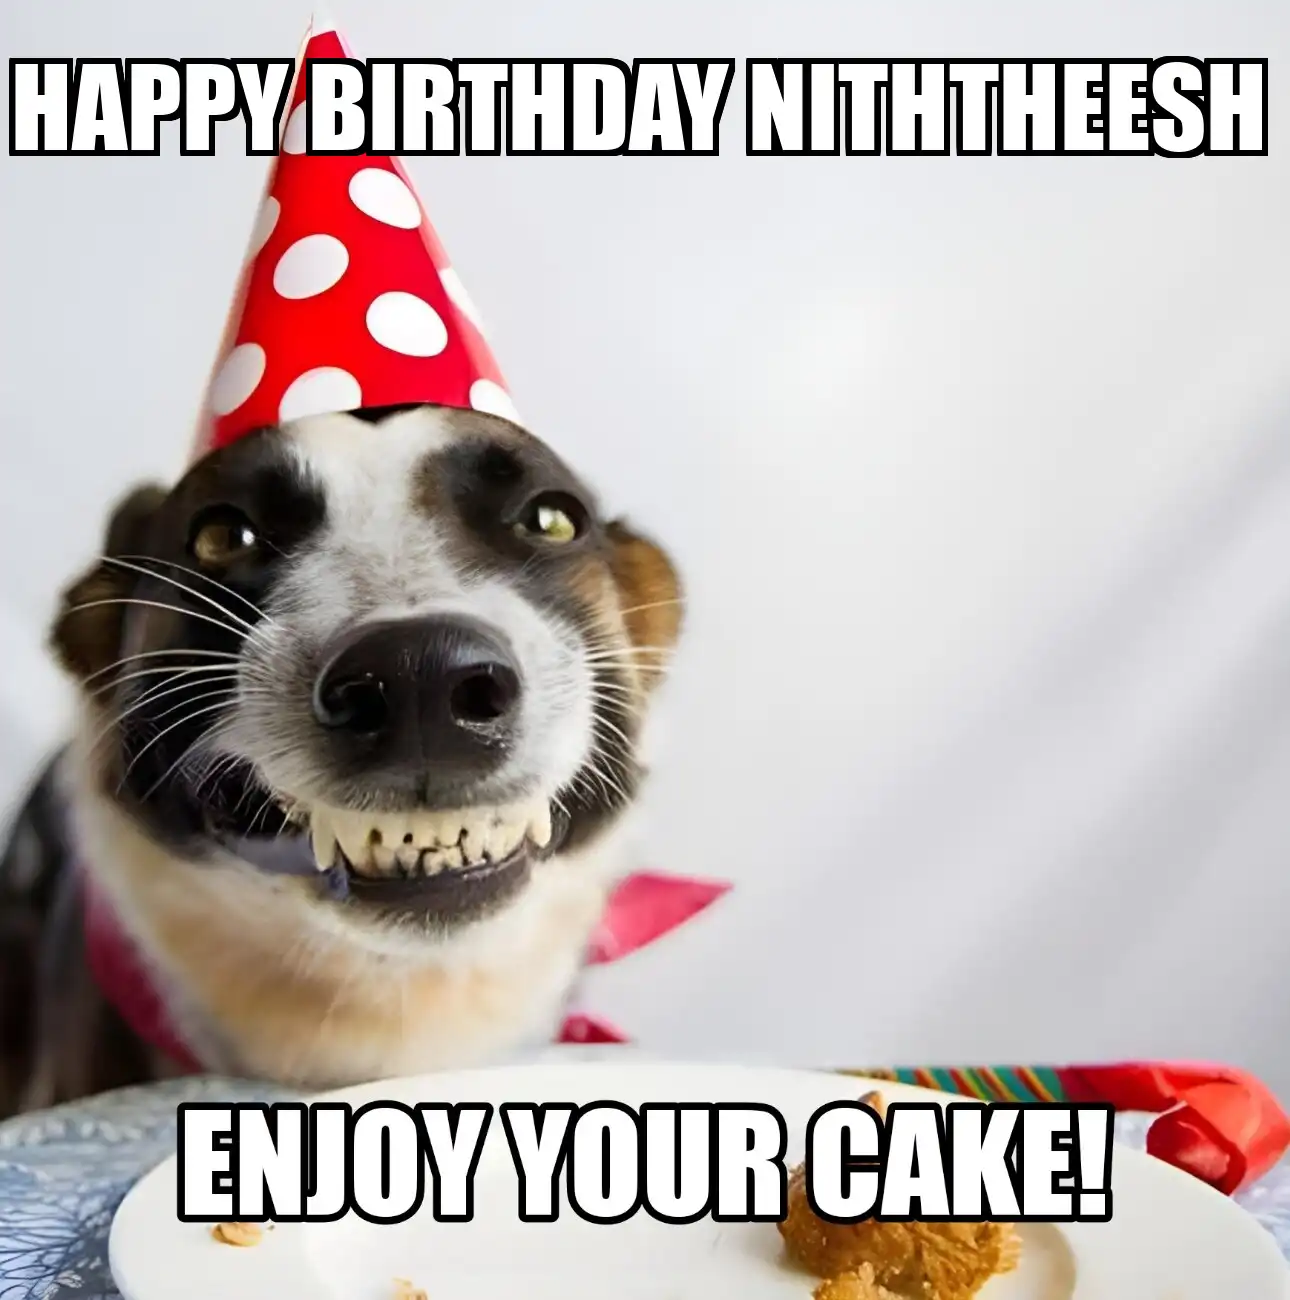 Happy Birthday Niththeesh Enjoy Your Cake Dog Meme